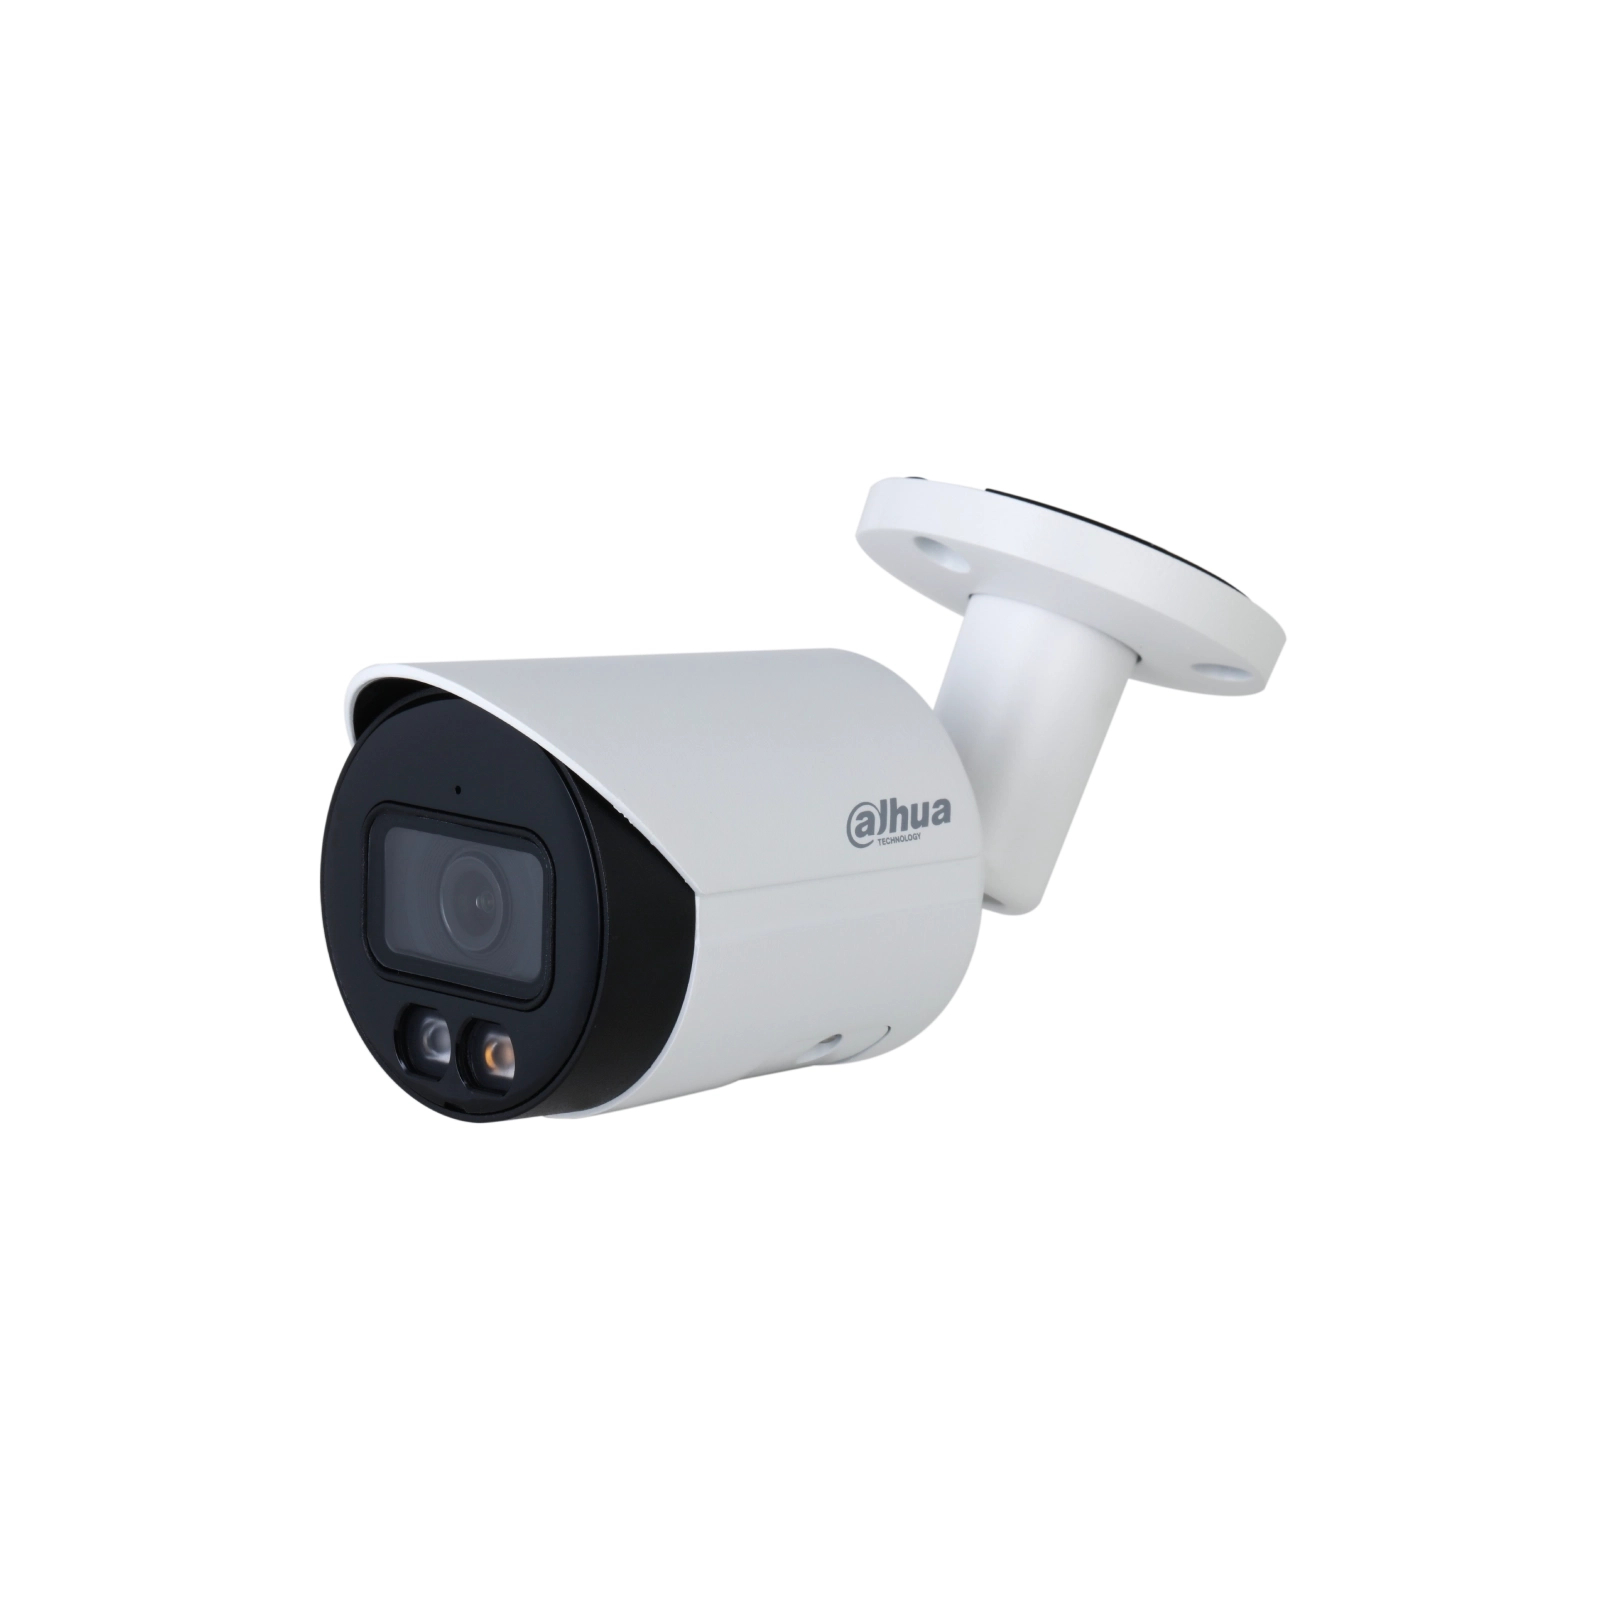 Камера видеонаблюдения Dahua DH-IPC-HFW2449S-S-IL (2.8)